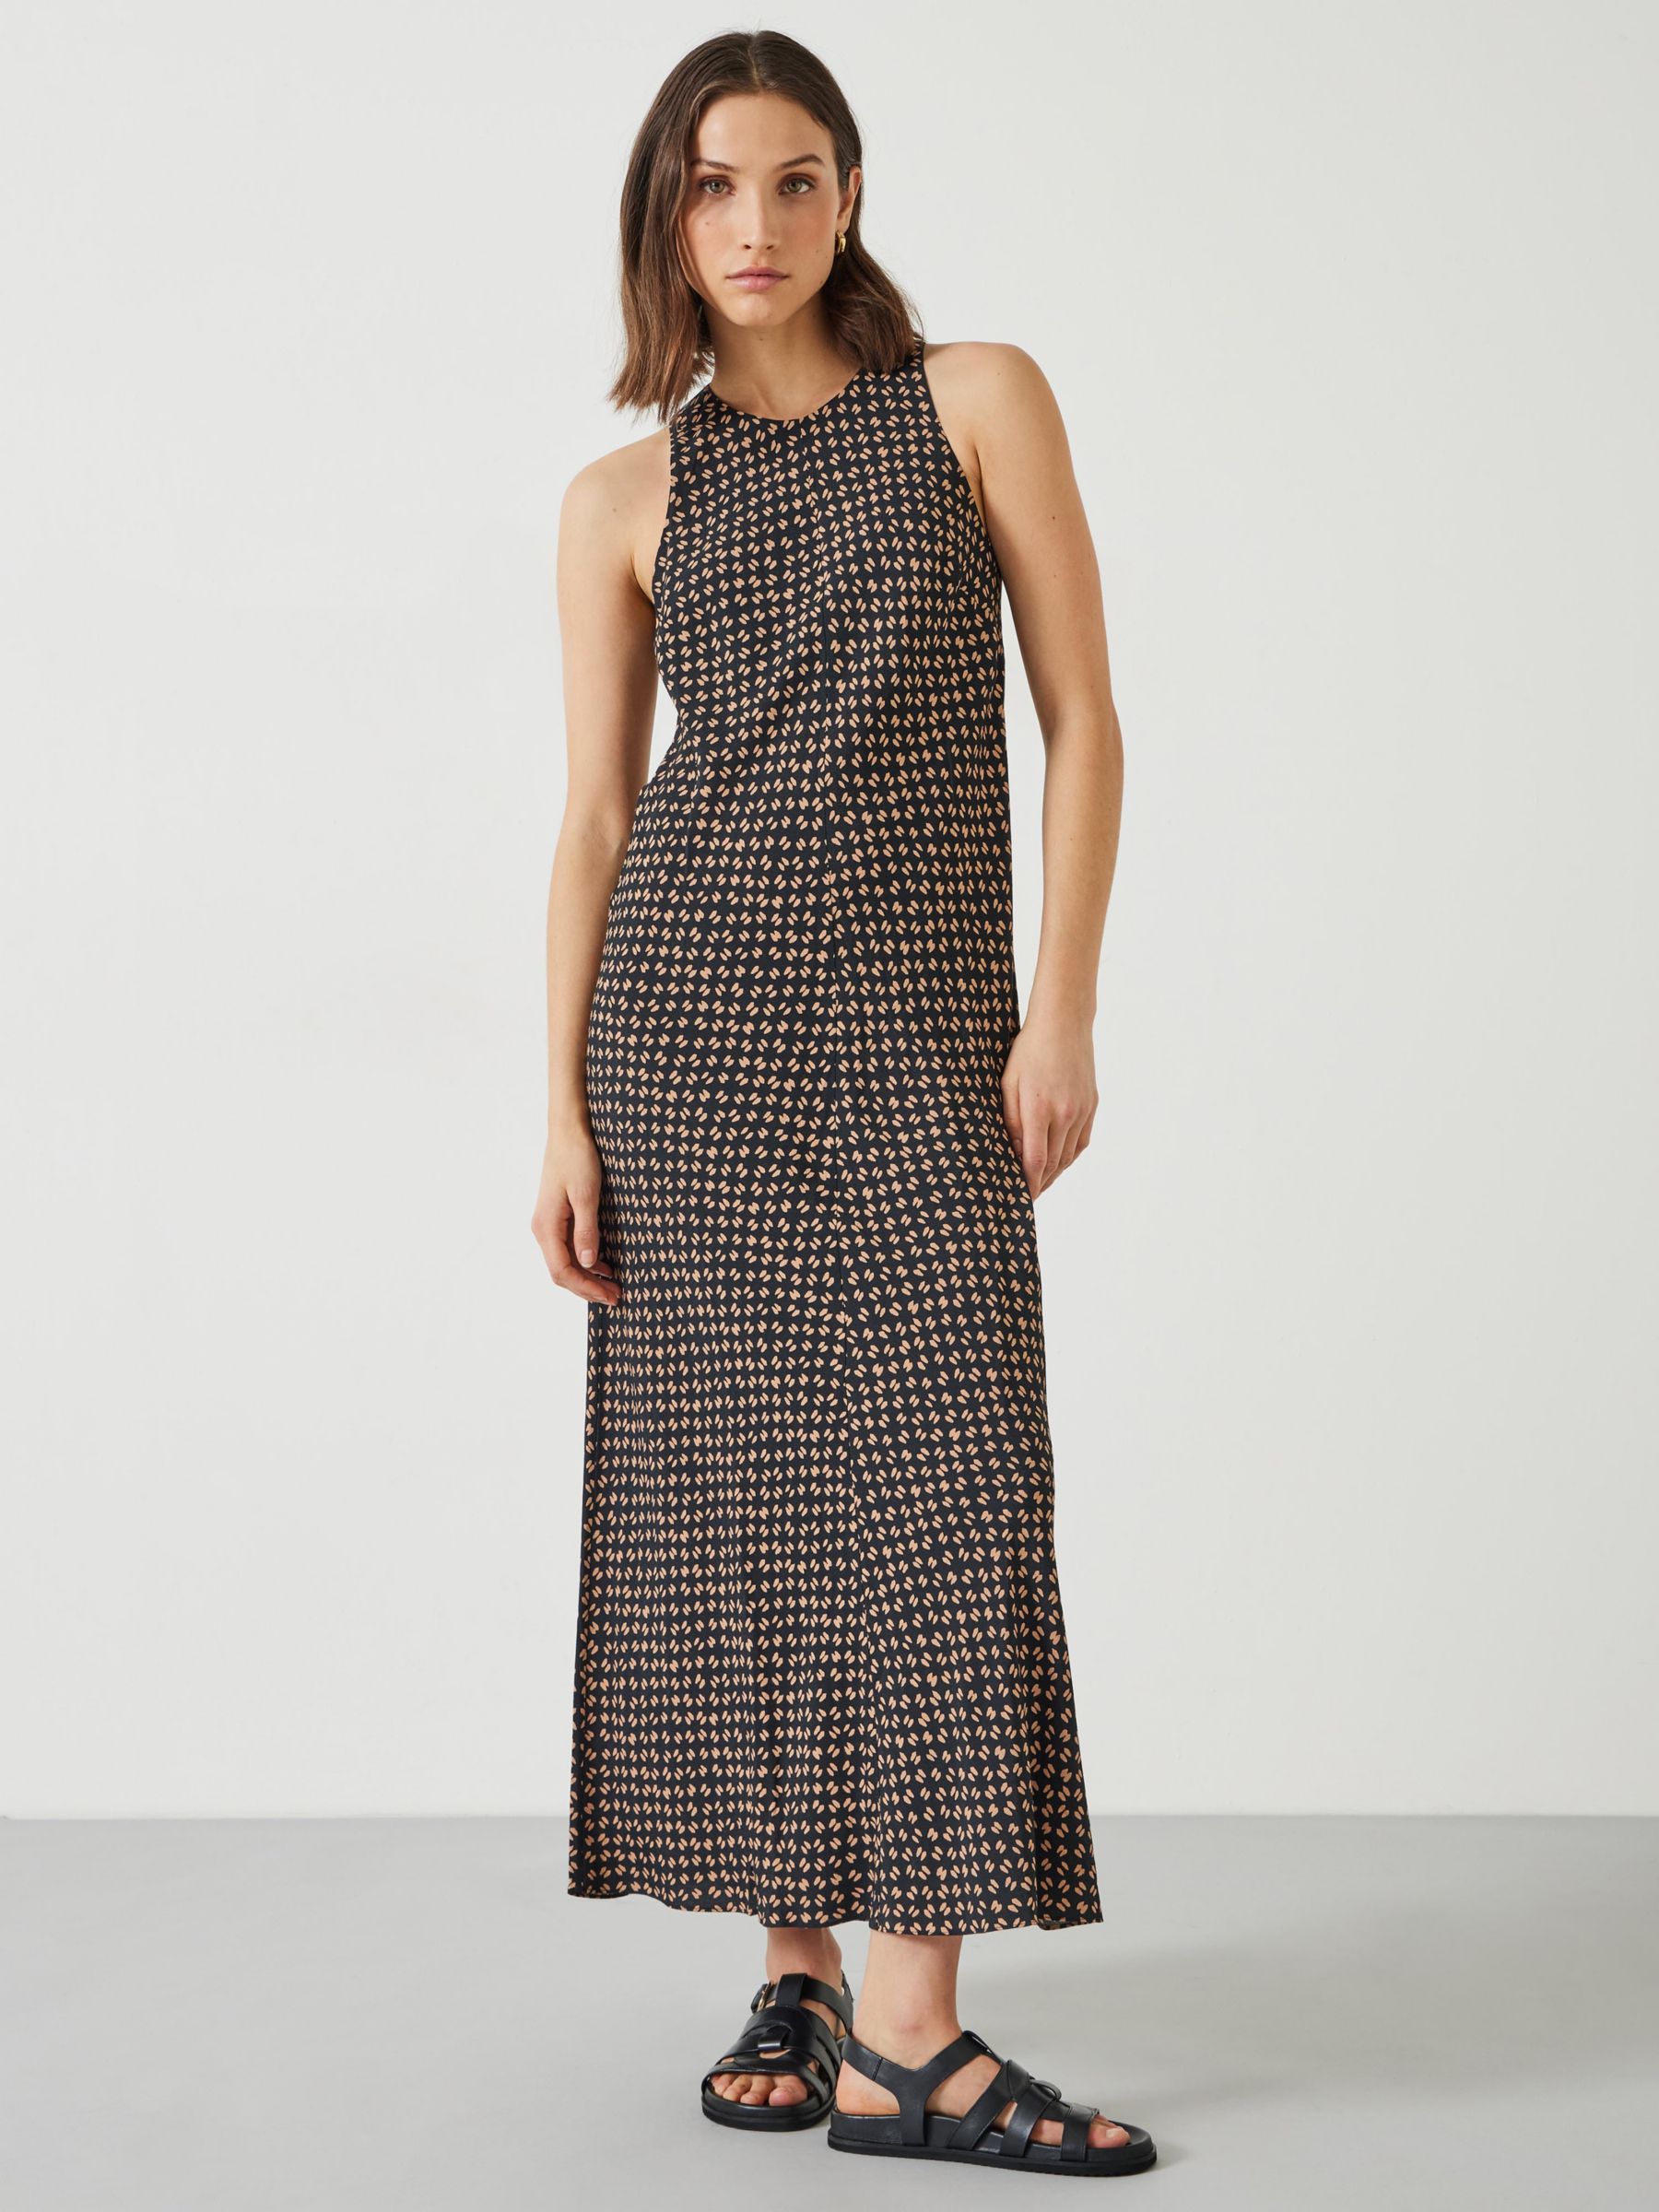 HUSH Imani Contrast Geometric Print Maxi Dress, Brown, 14